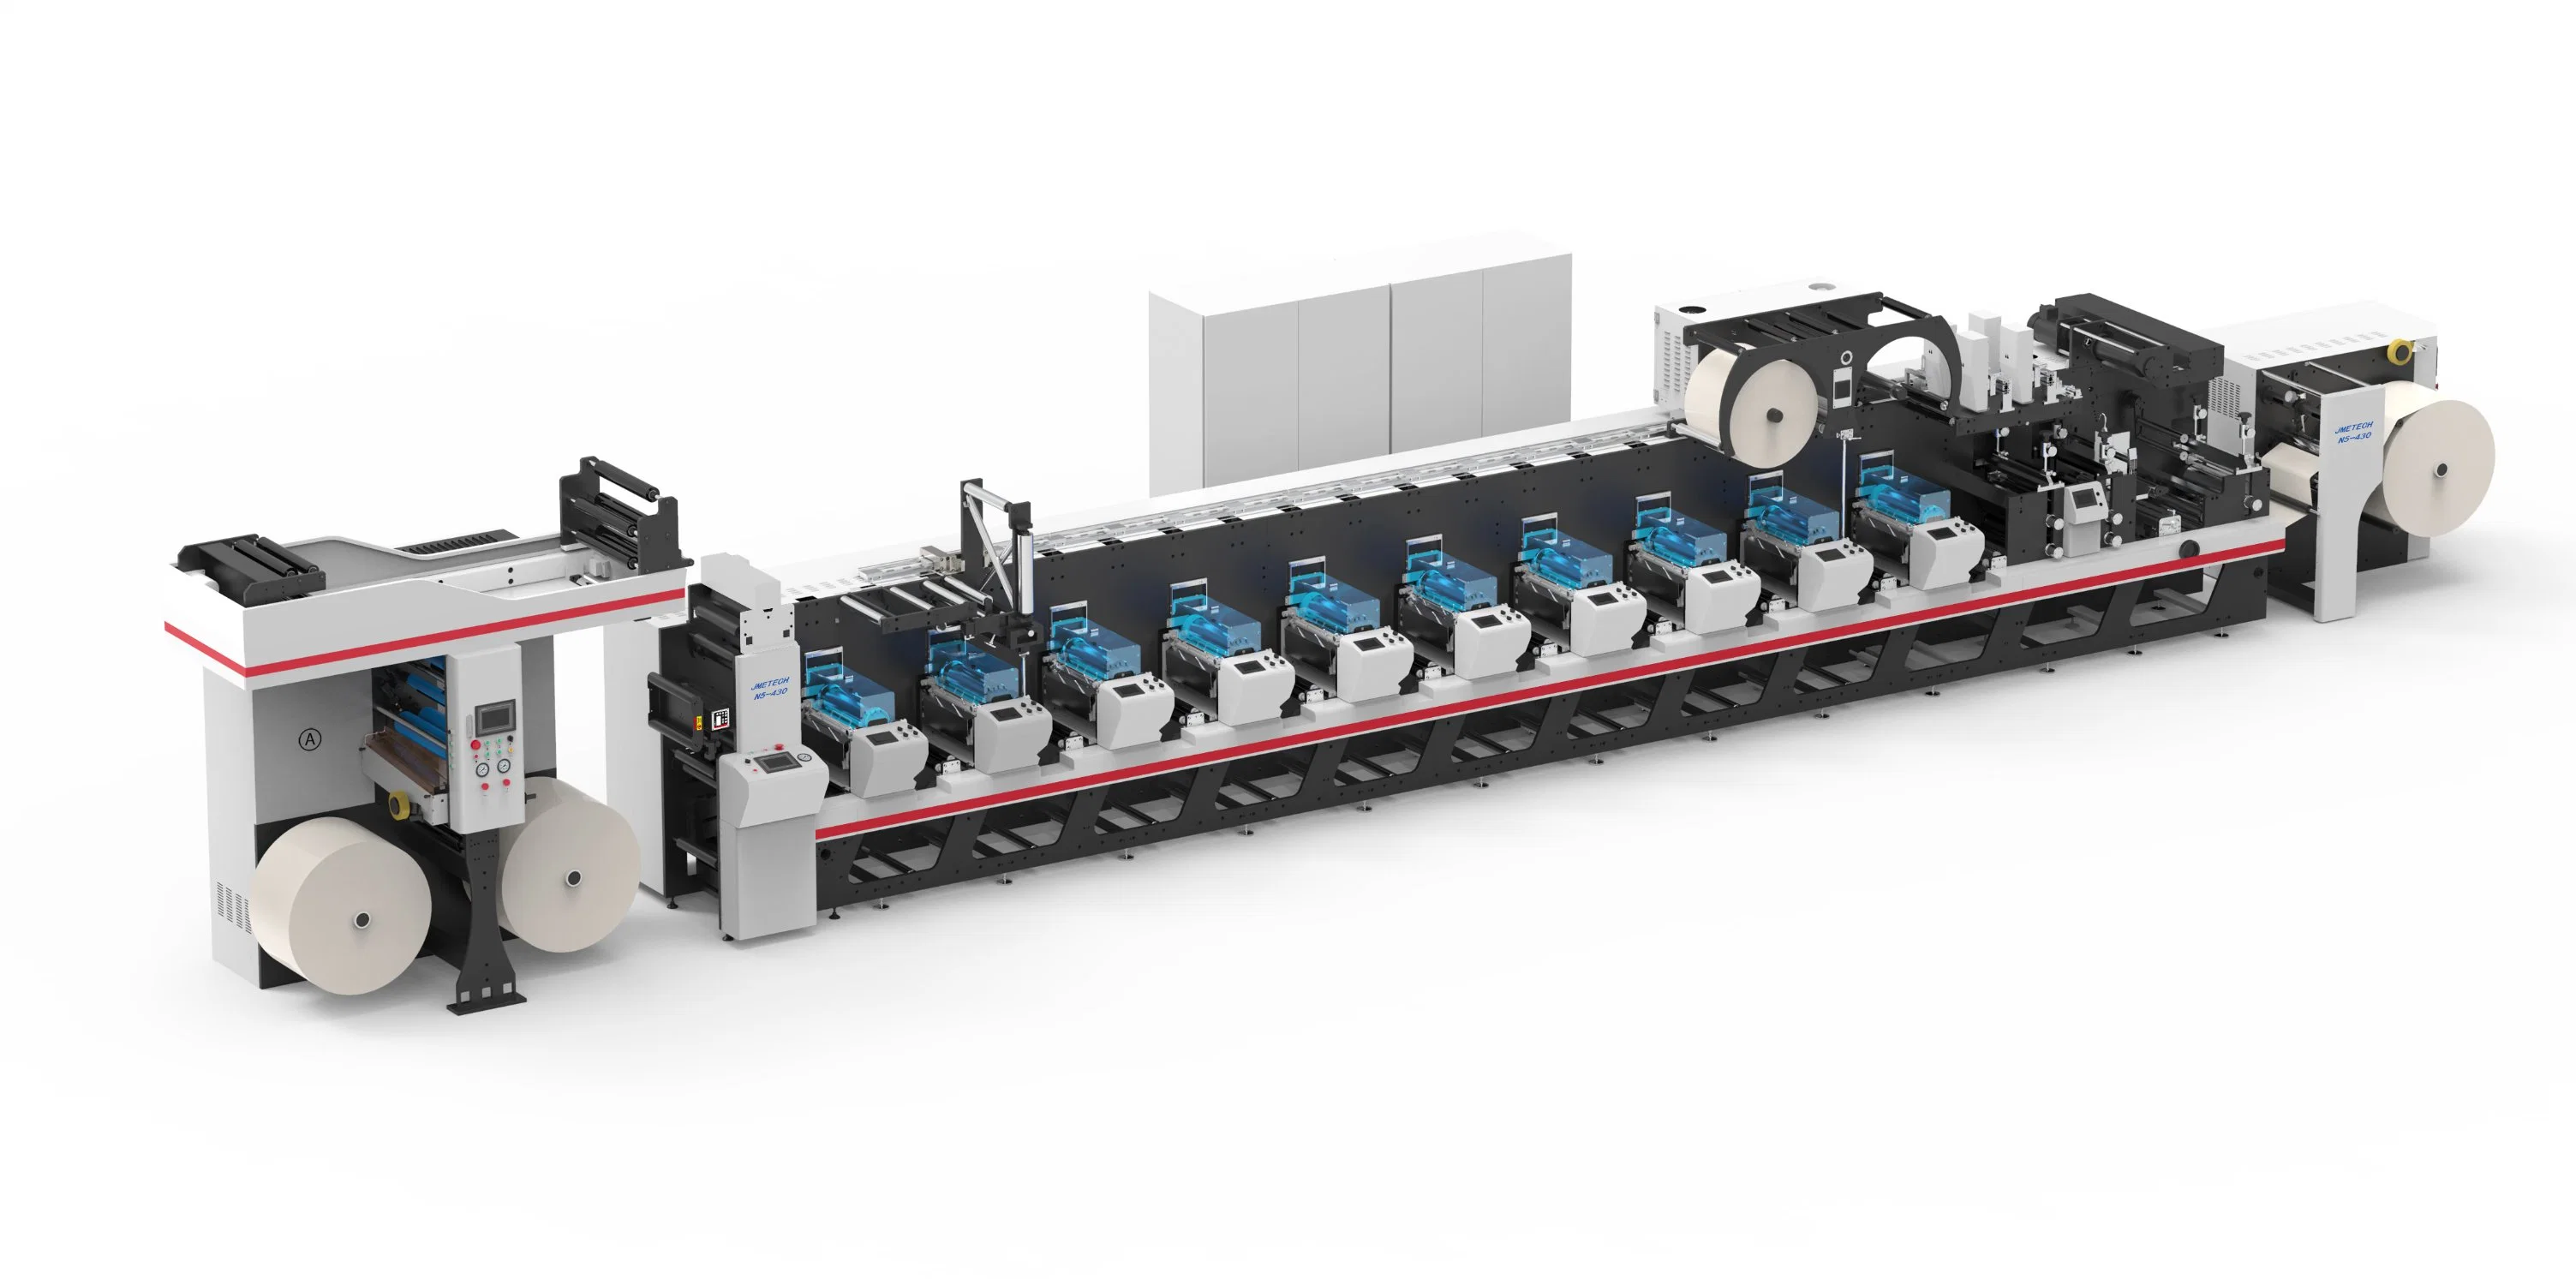 Impresora flexográfica en línea etiqueta máquina de impresión flexográfica e impresión de películas Maquinaria impresión Prensa impresora de etiquetas 2-12 colores Alta velocidad